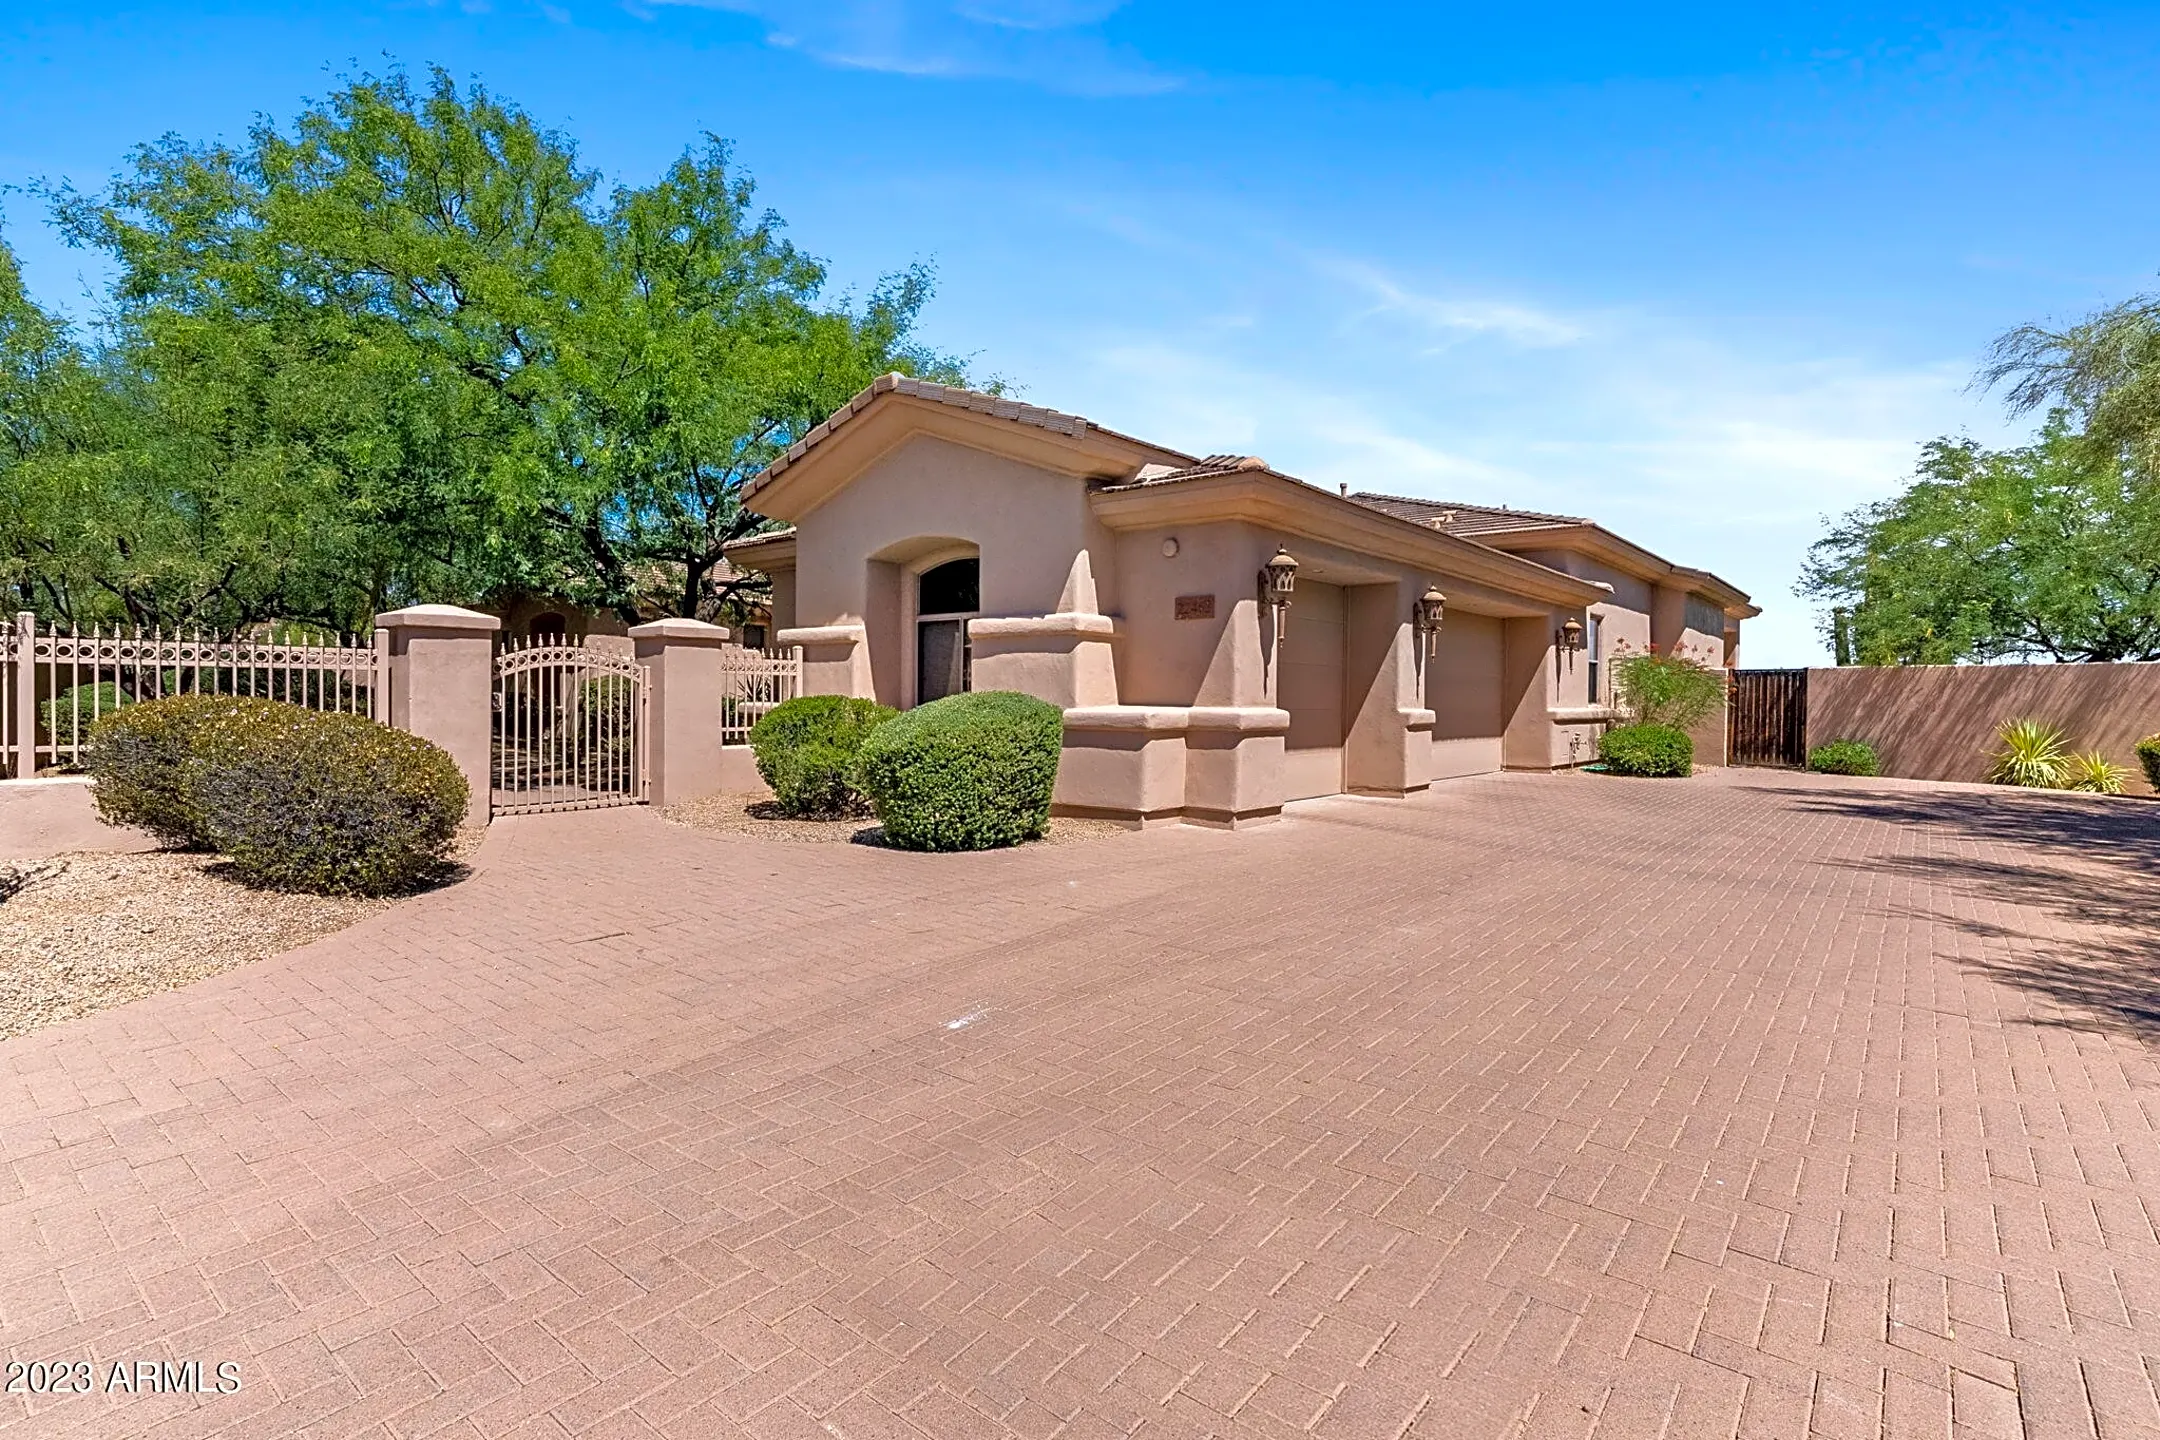 22463 N 54th St | Phoenix, AZ Houses for Rent | Rent.